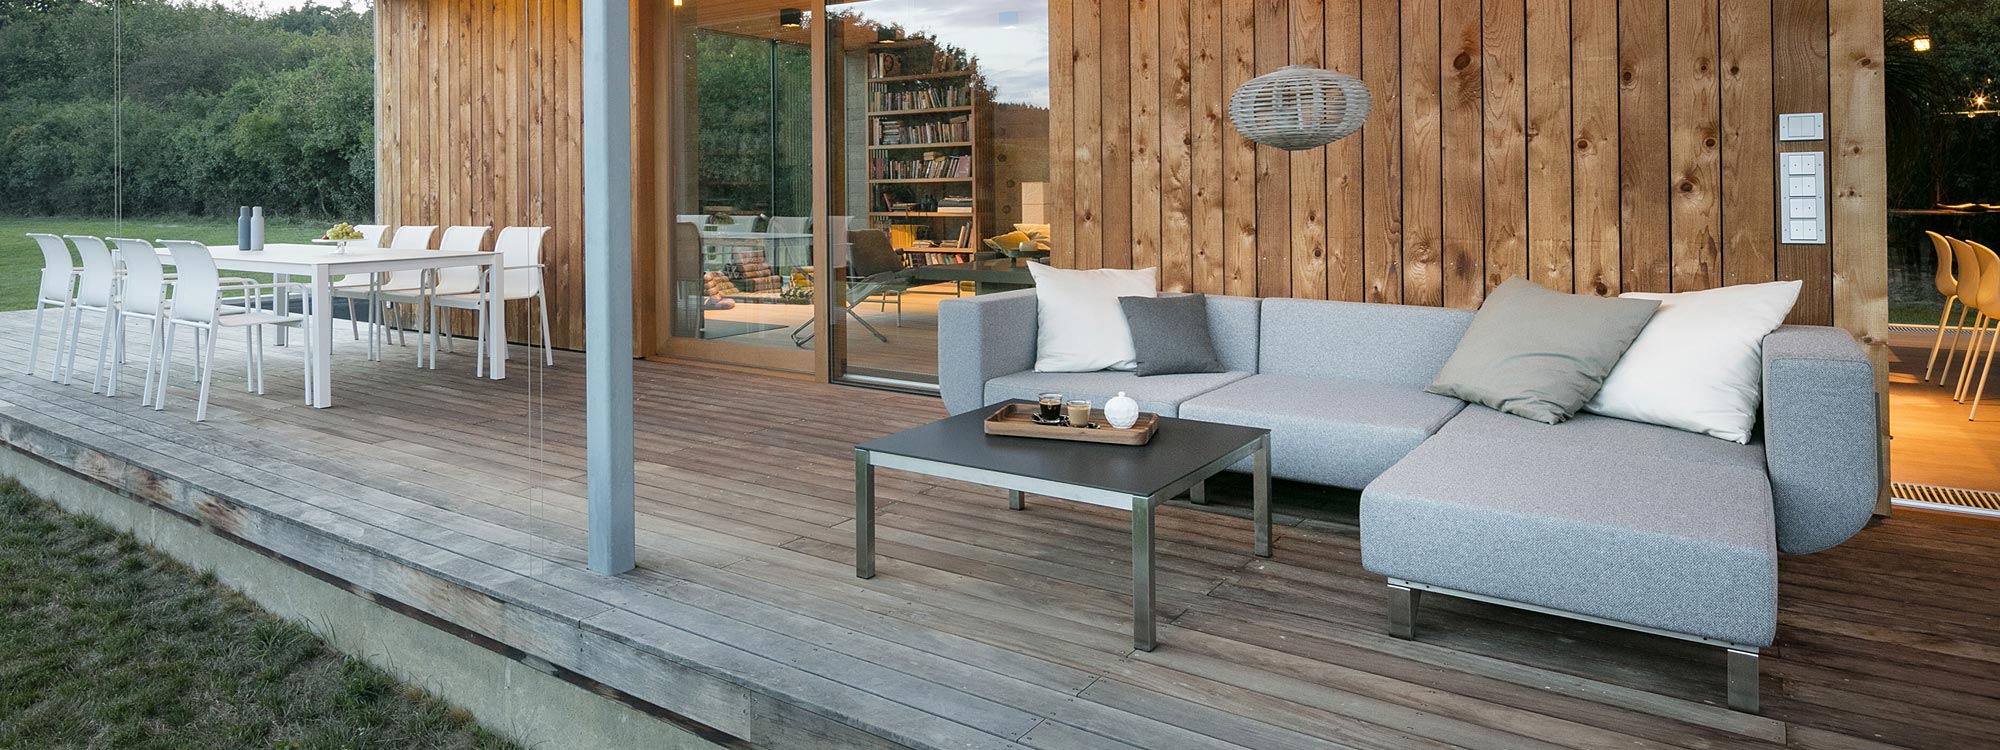 Lotos garden sofa and Puro garden dining set on wooden decking